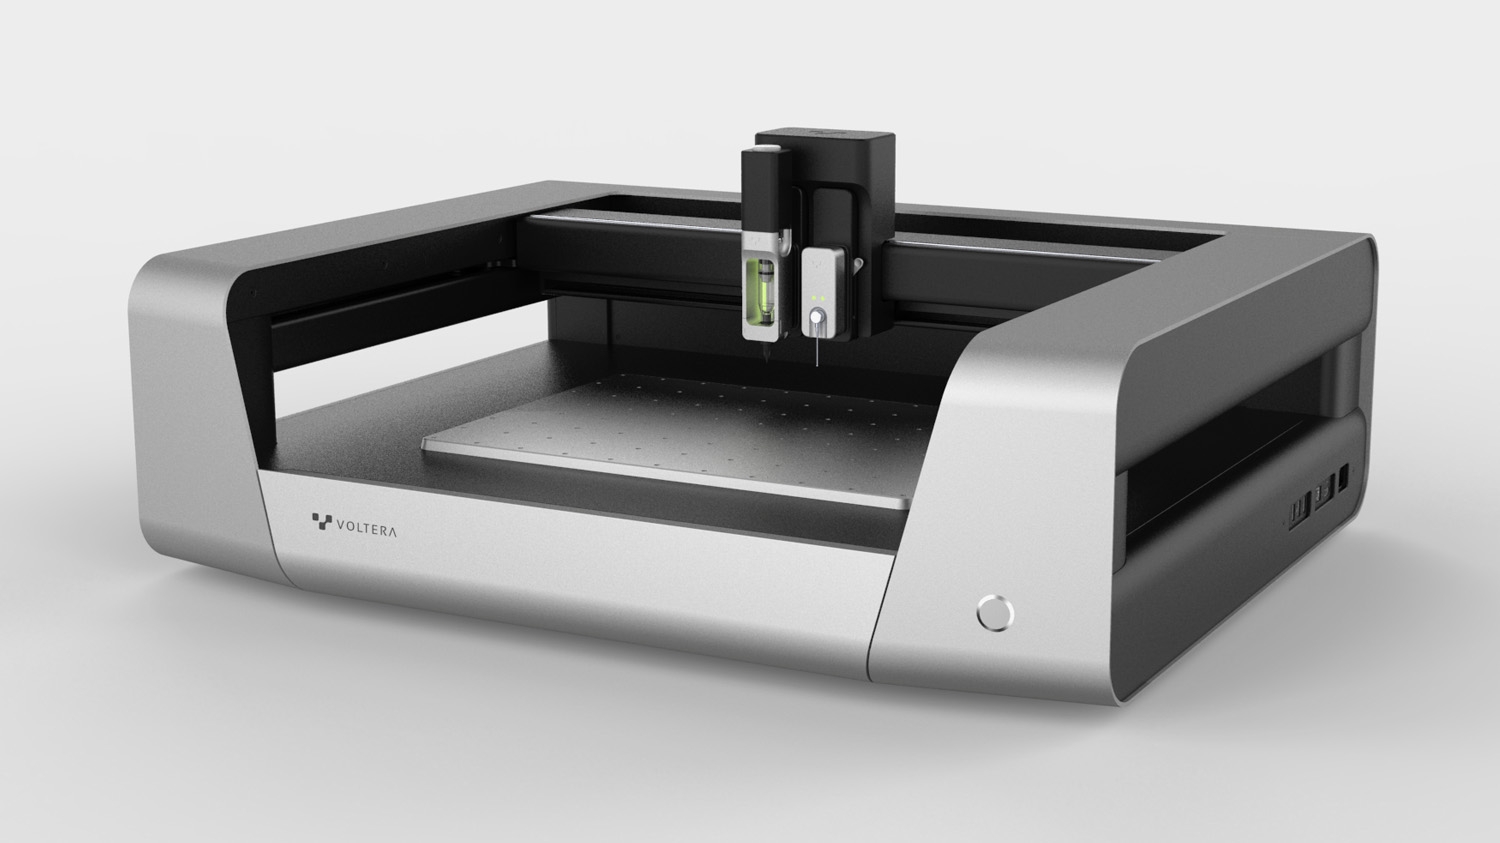 A sleek gray and black designed printer.